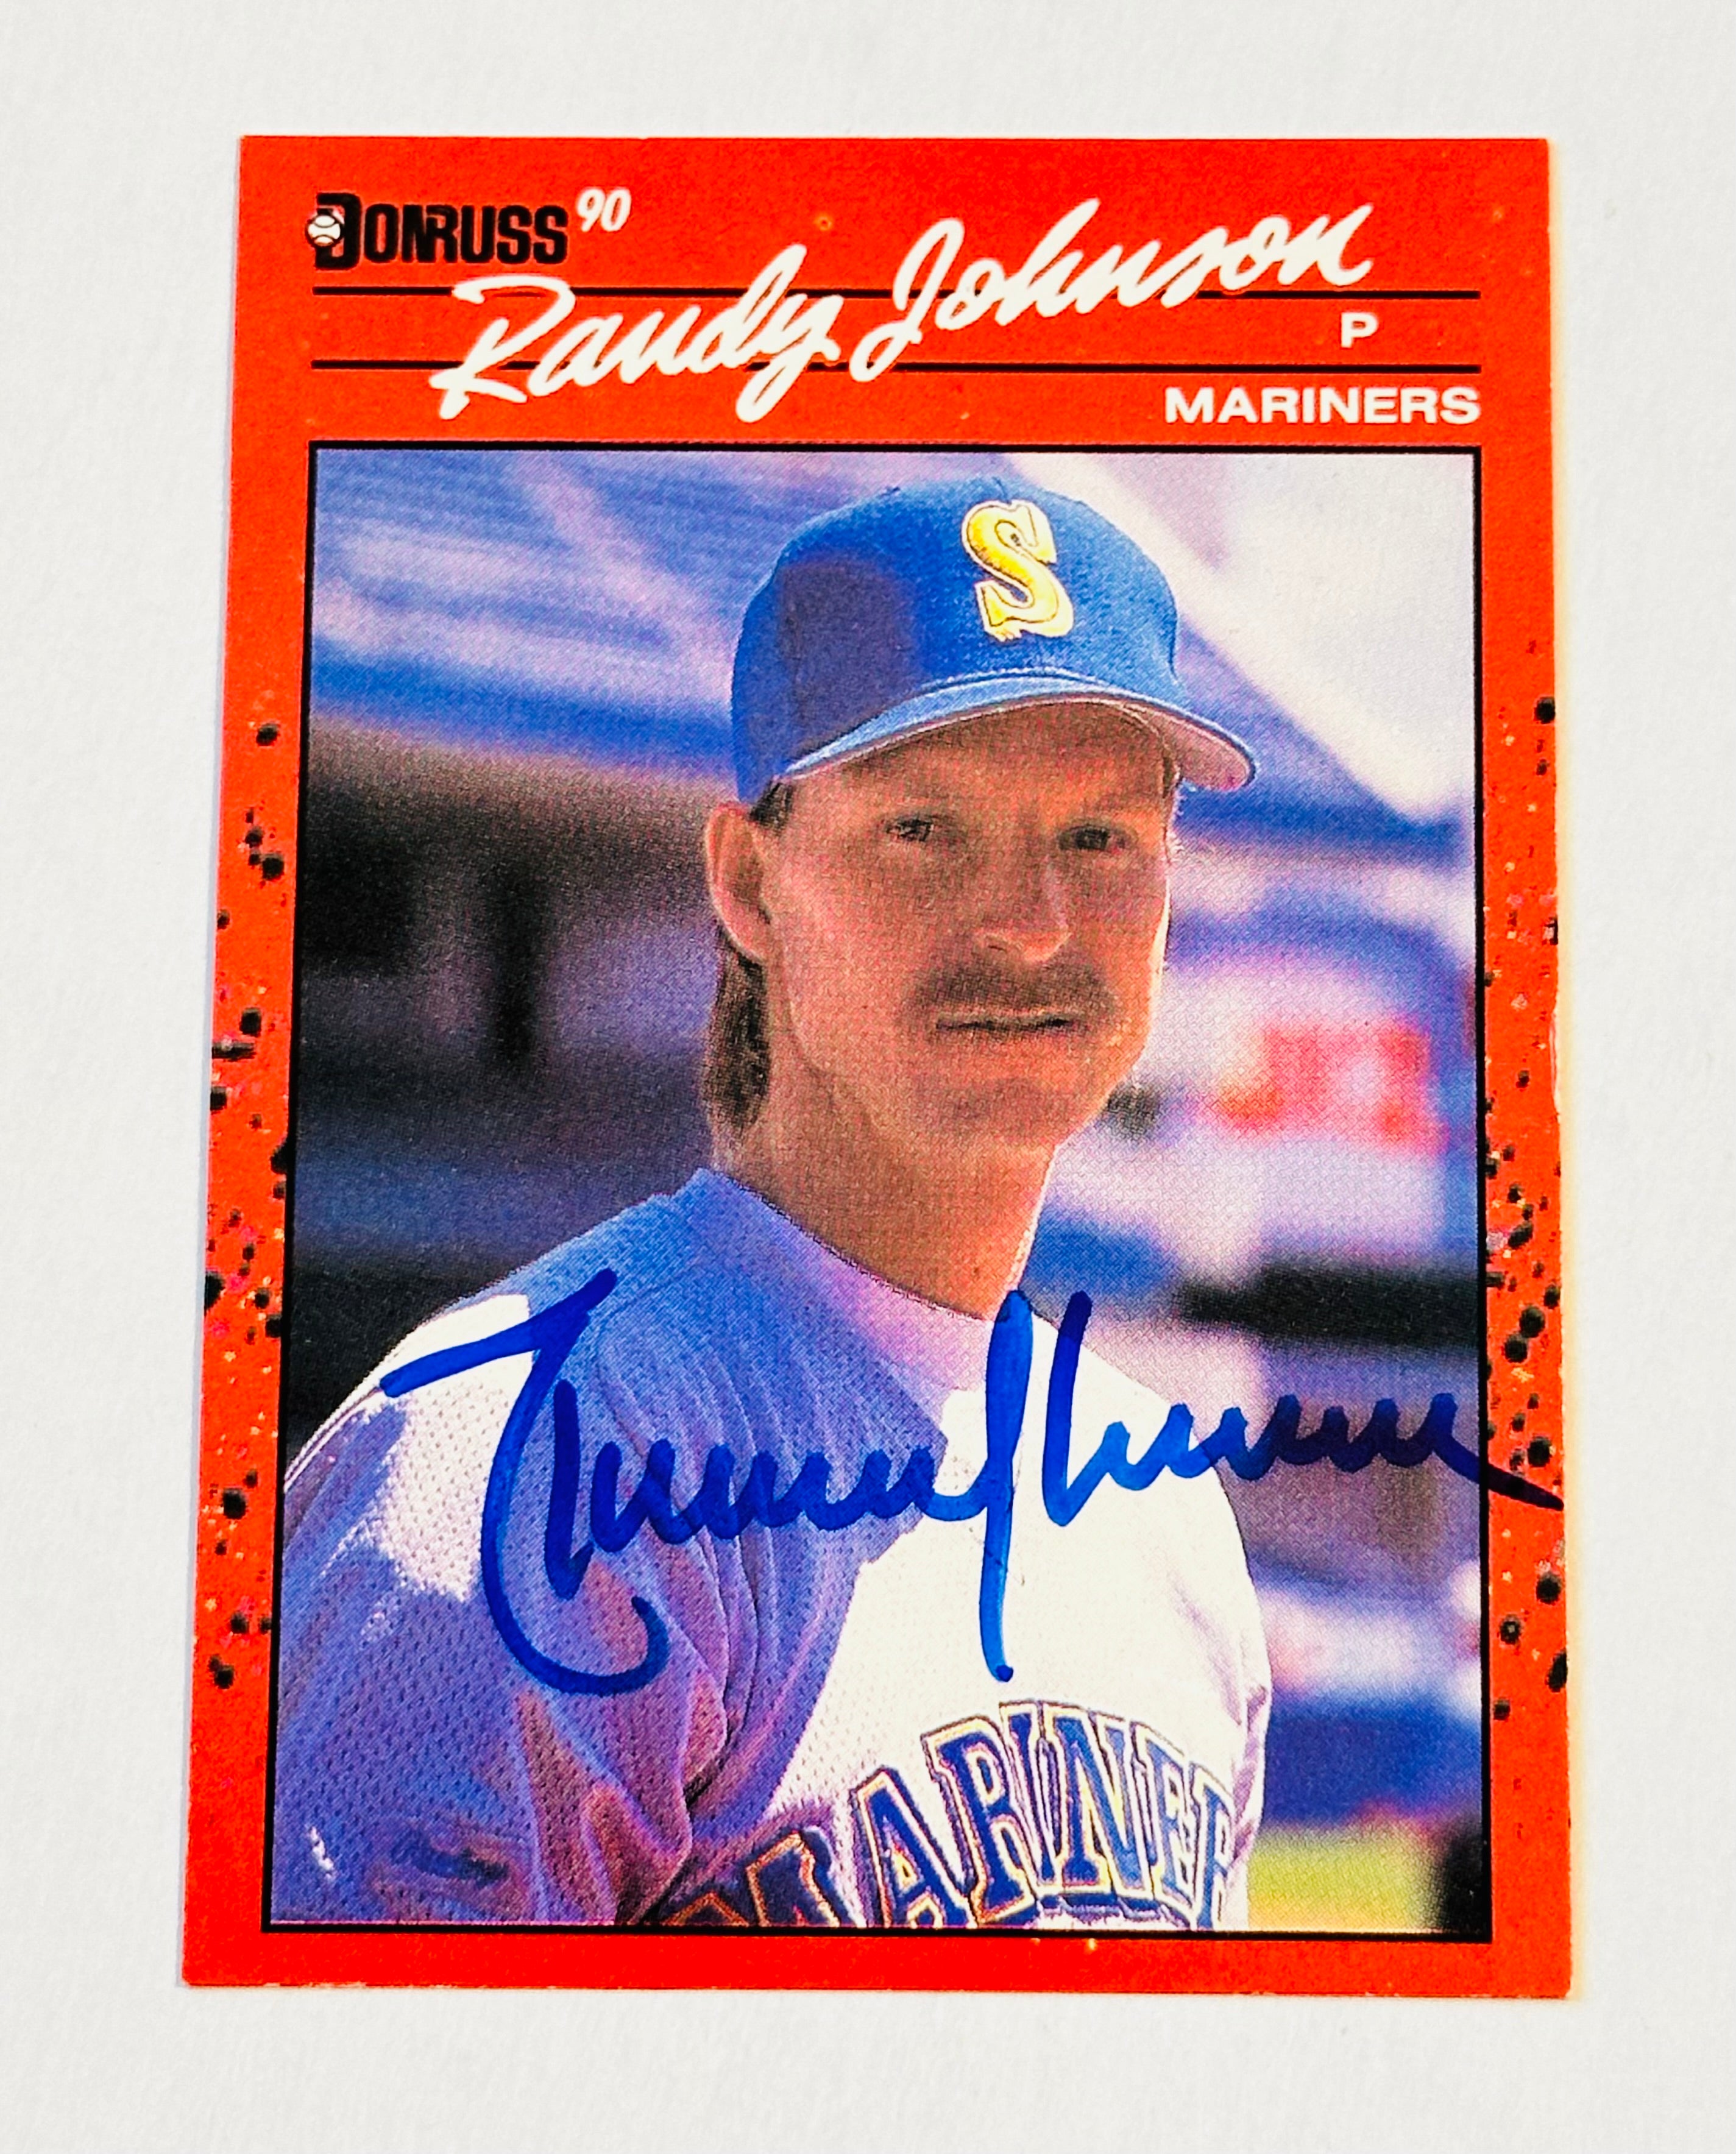 Randy Johnson baseball legend, rare autographed card with COA